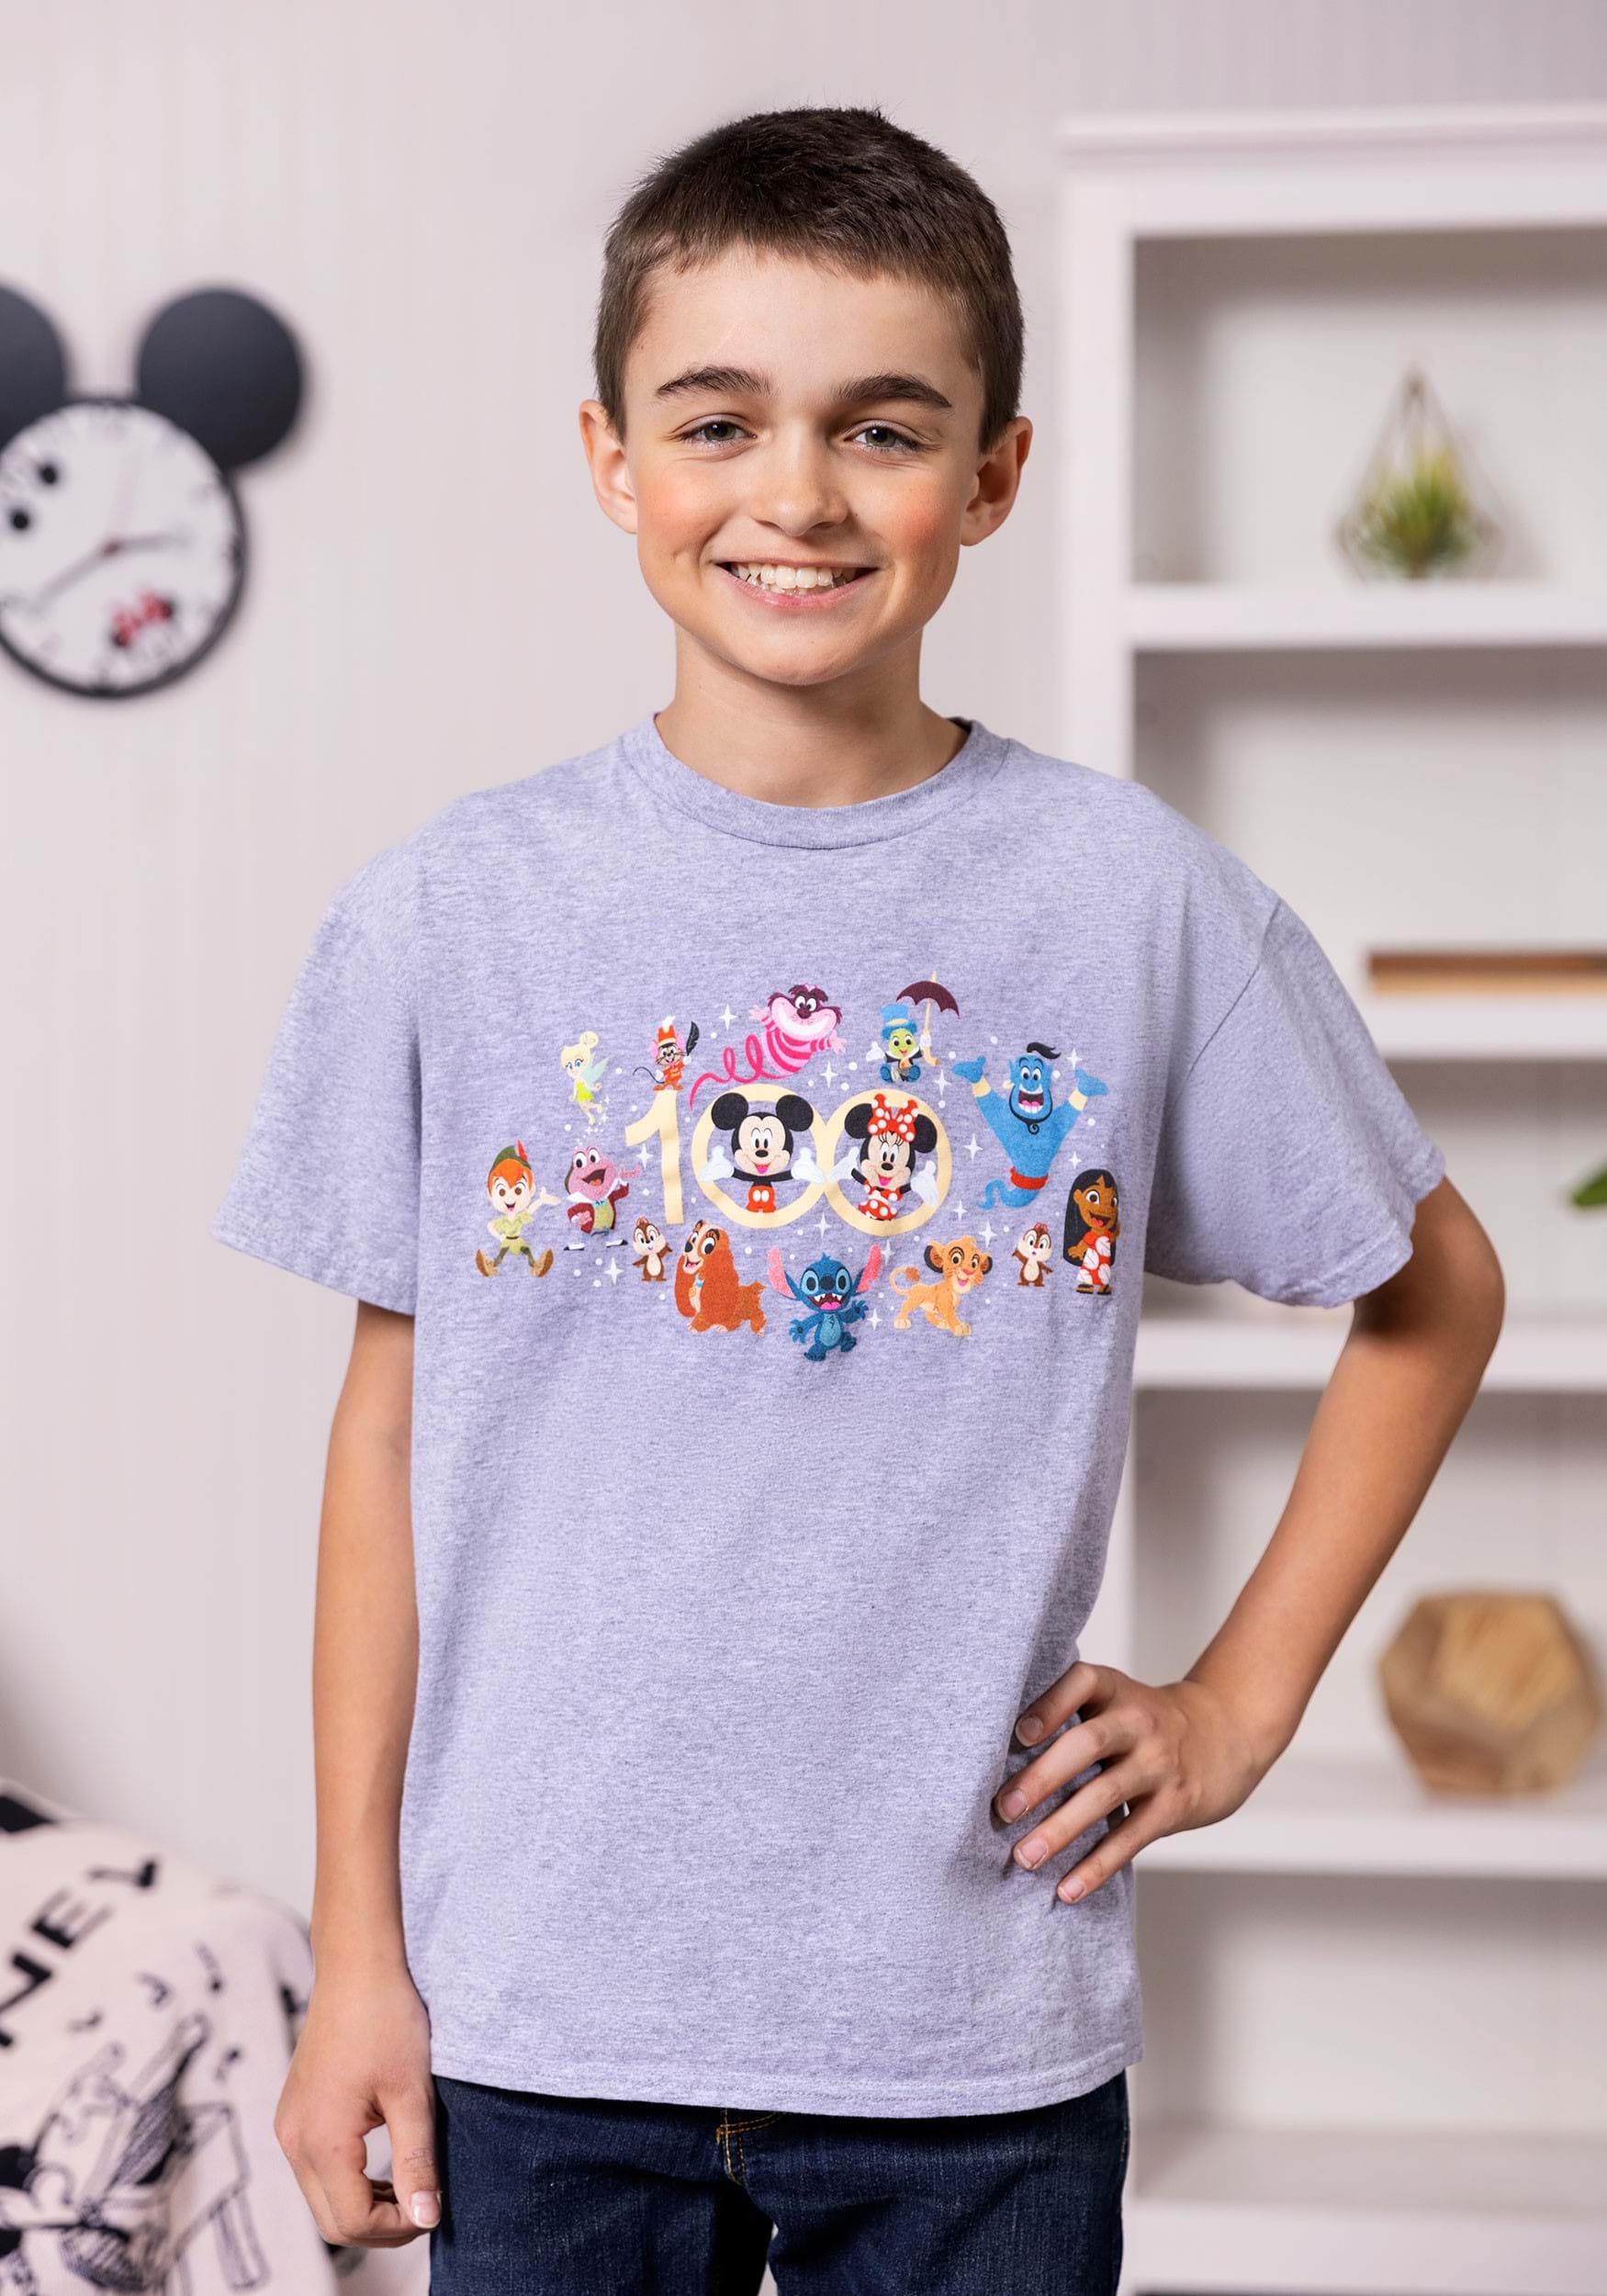 New Kids Childrens Ninja Kidz Tv Gaming T-Shirt Team Boys Girls Cool Fun Tee  Top